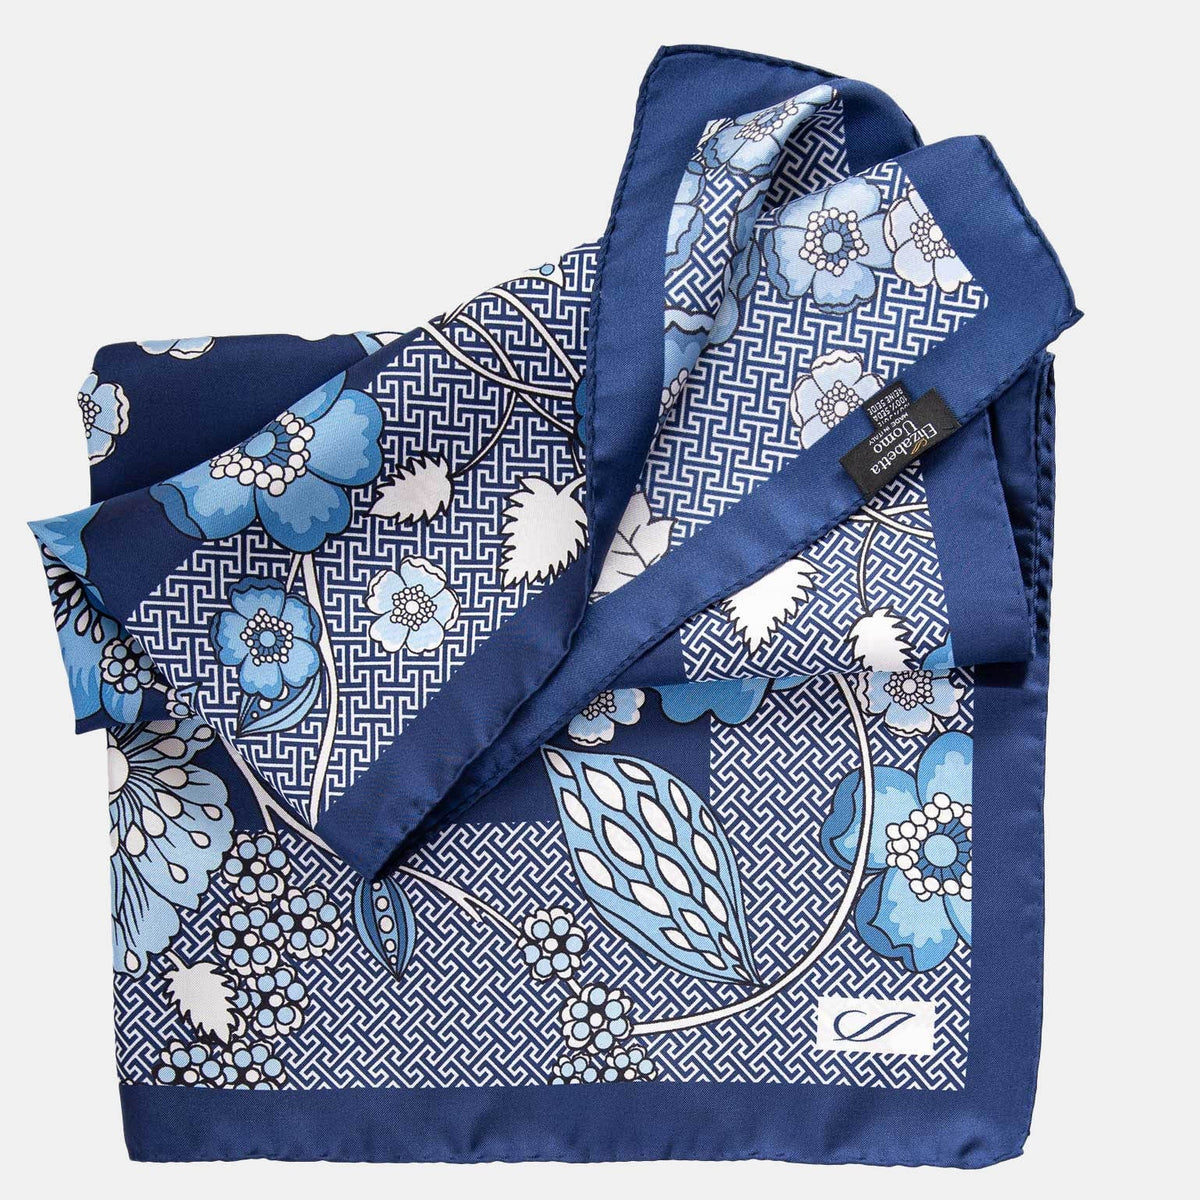 Blue Silk Neckerchief - Floral Print Made in Italy